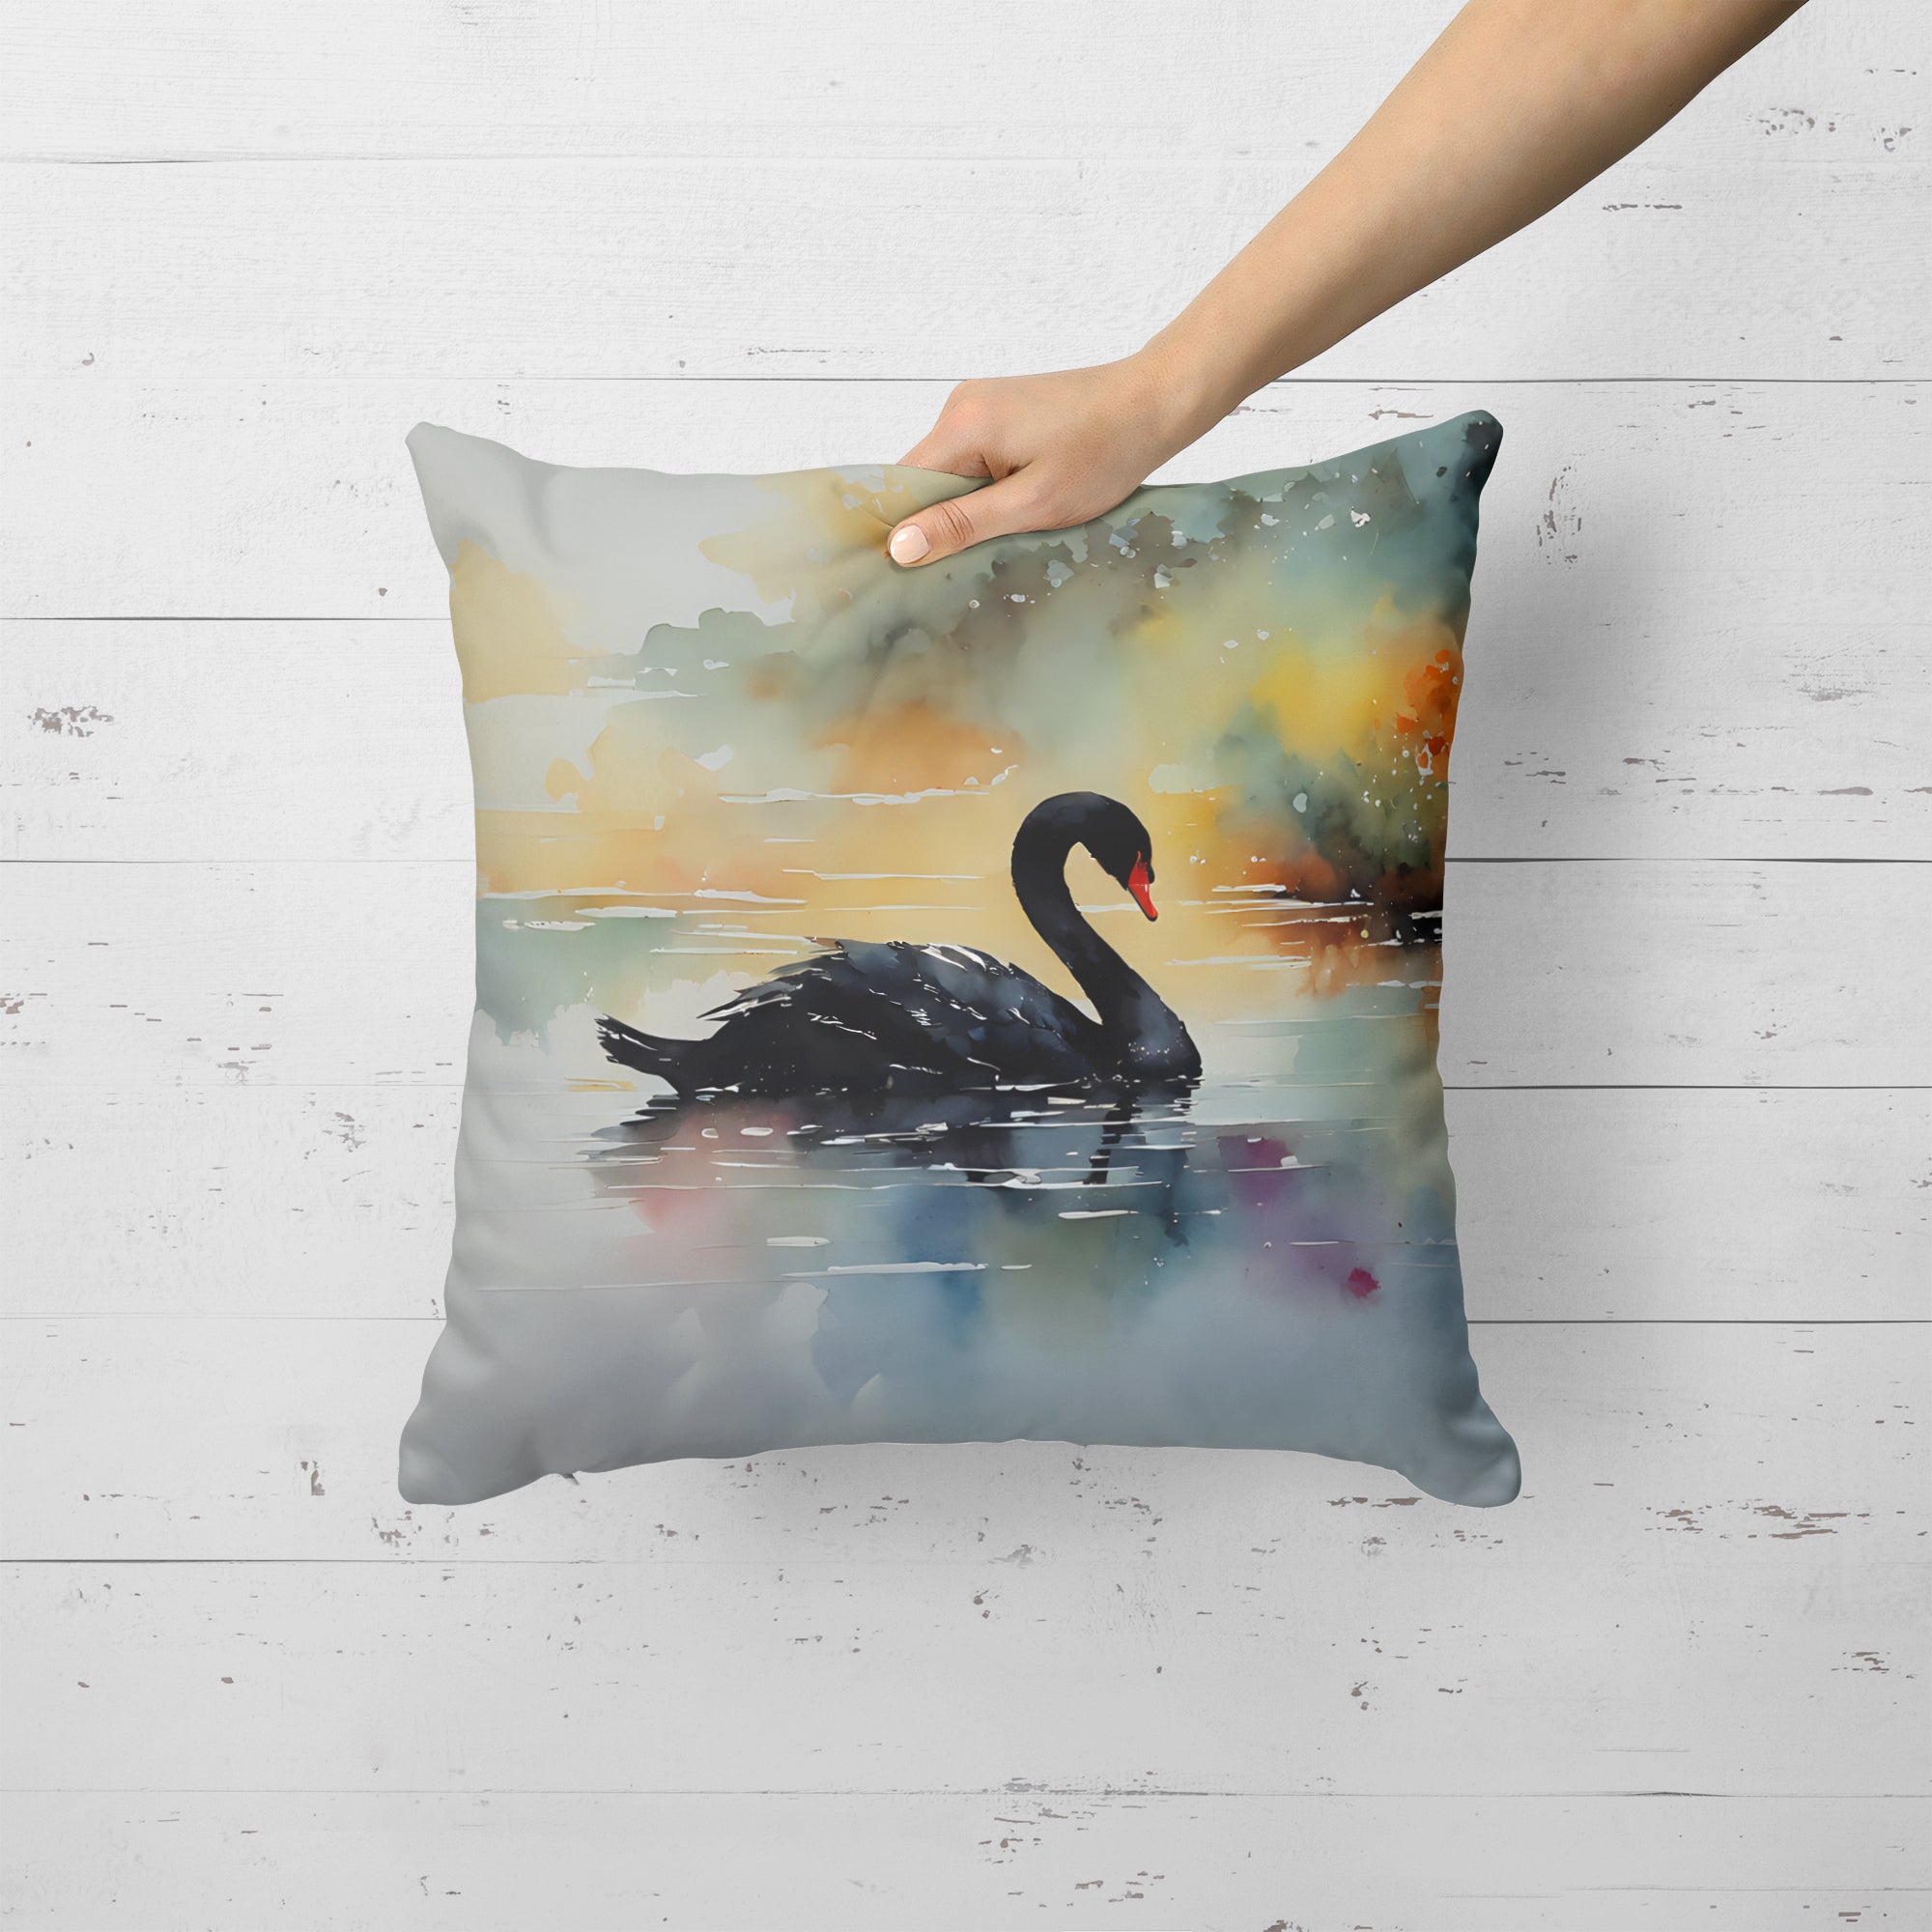 Buy this Black Swan Throw Pillow